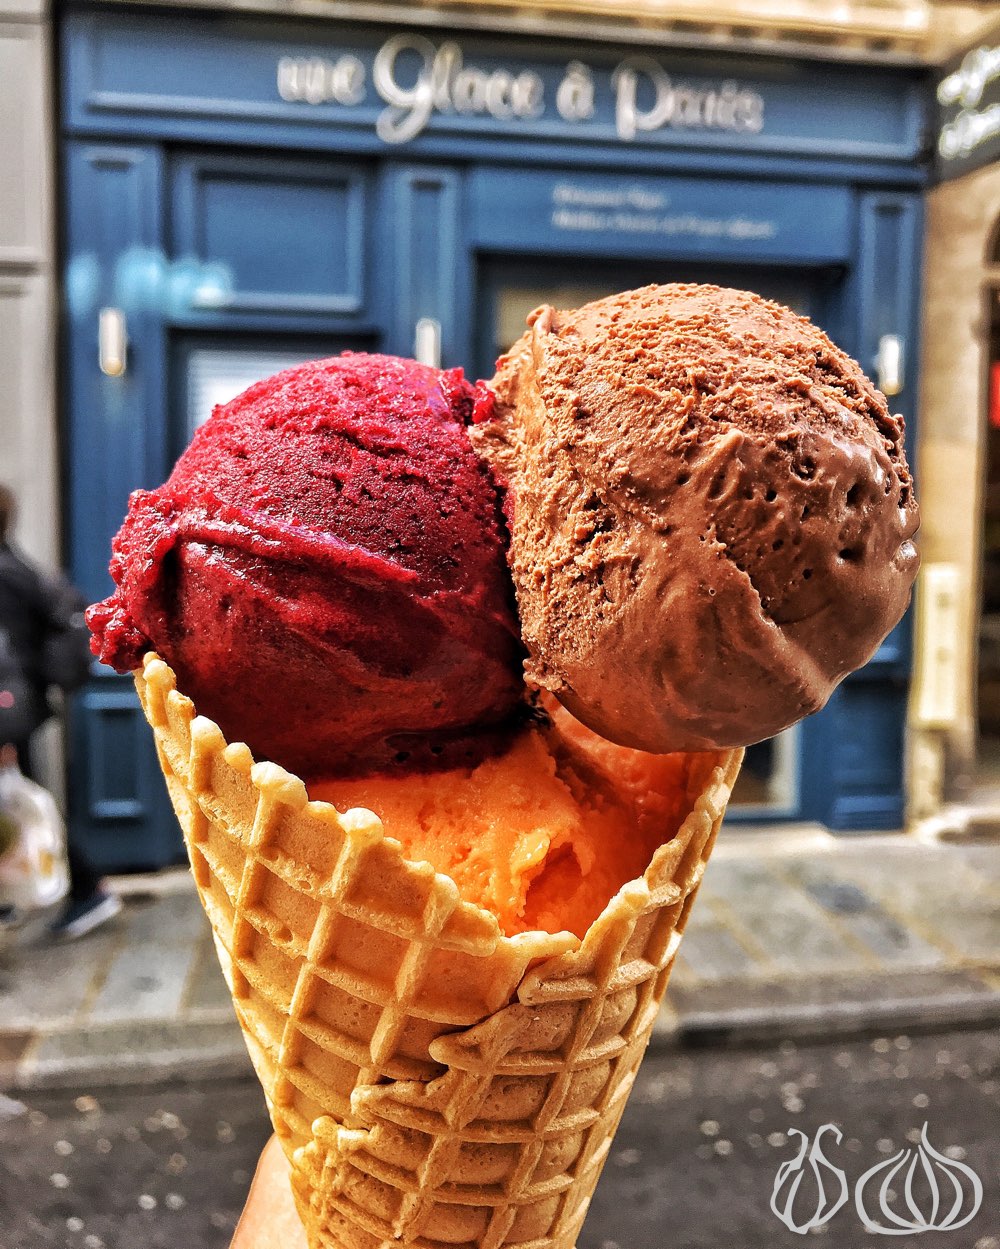 une-glace-a-paris-best-ice-cream92016-05-30-10-47-45